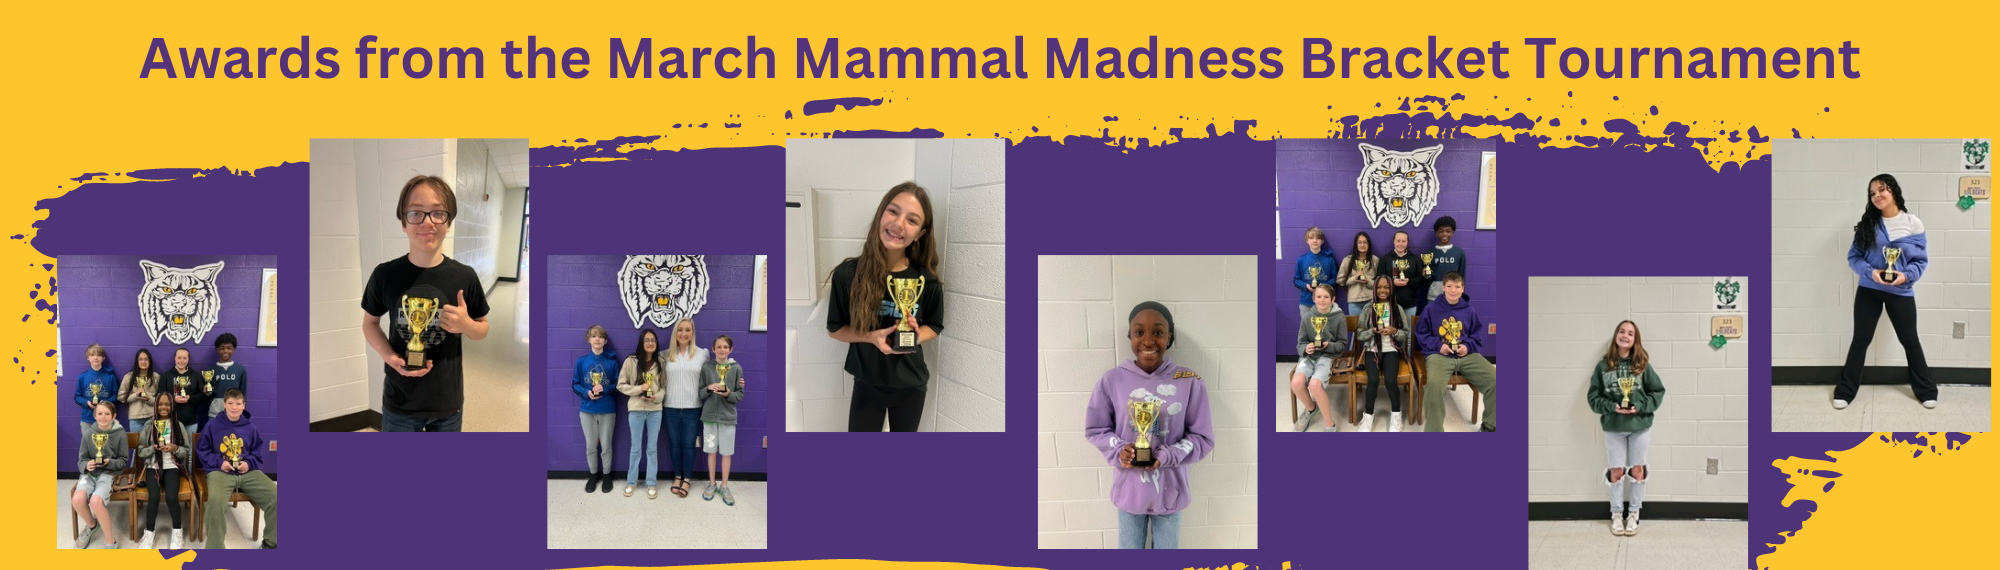 March Mammal Bracket Tournament Awards